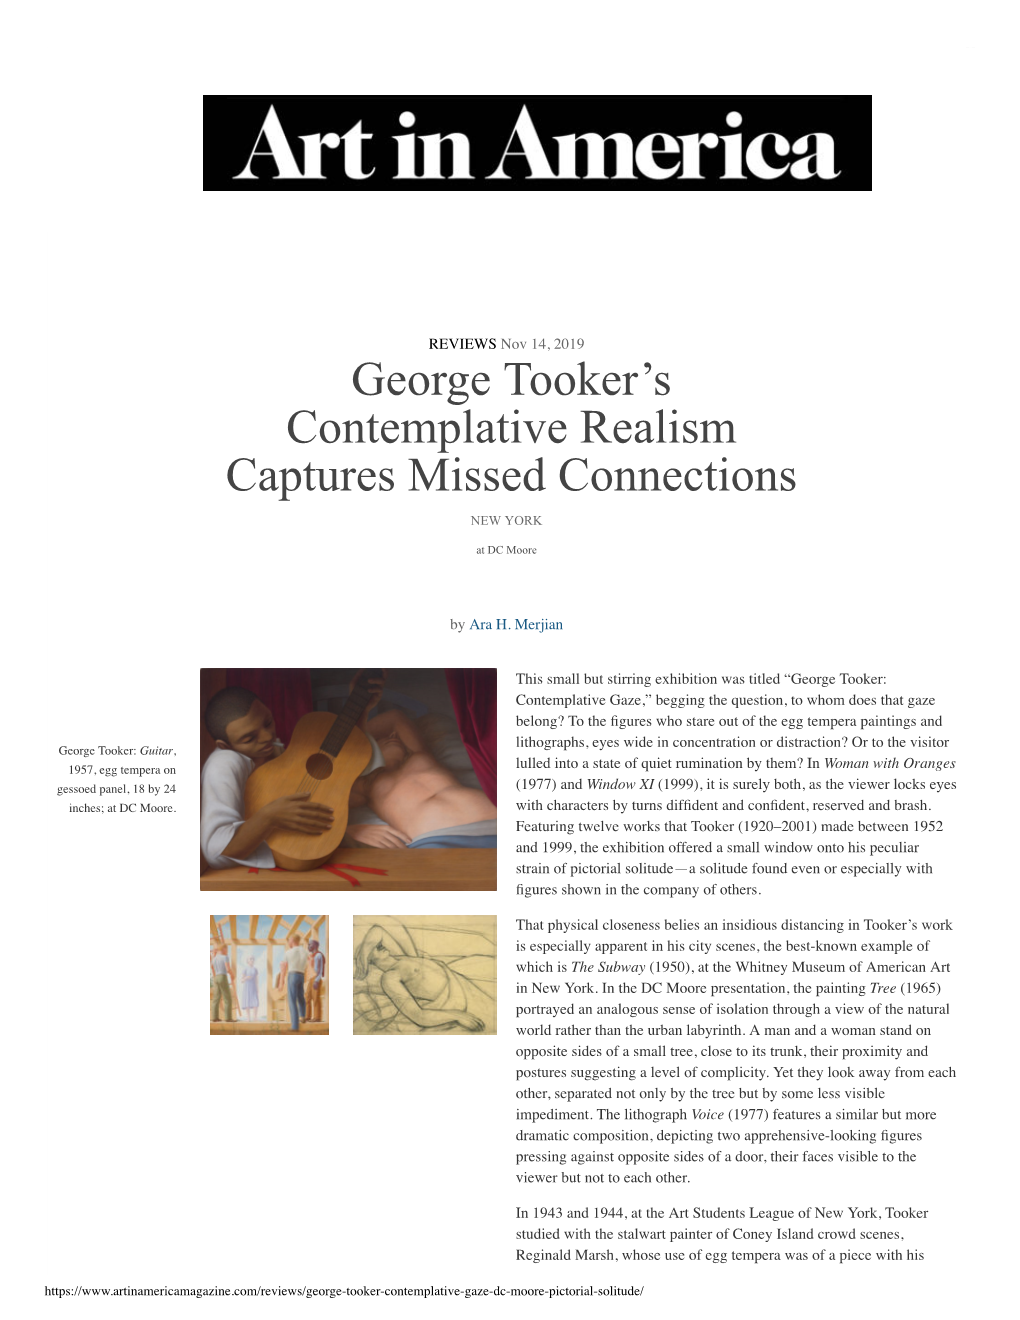 George Tooker's Contemplative Realism Captures Missed